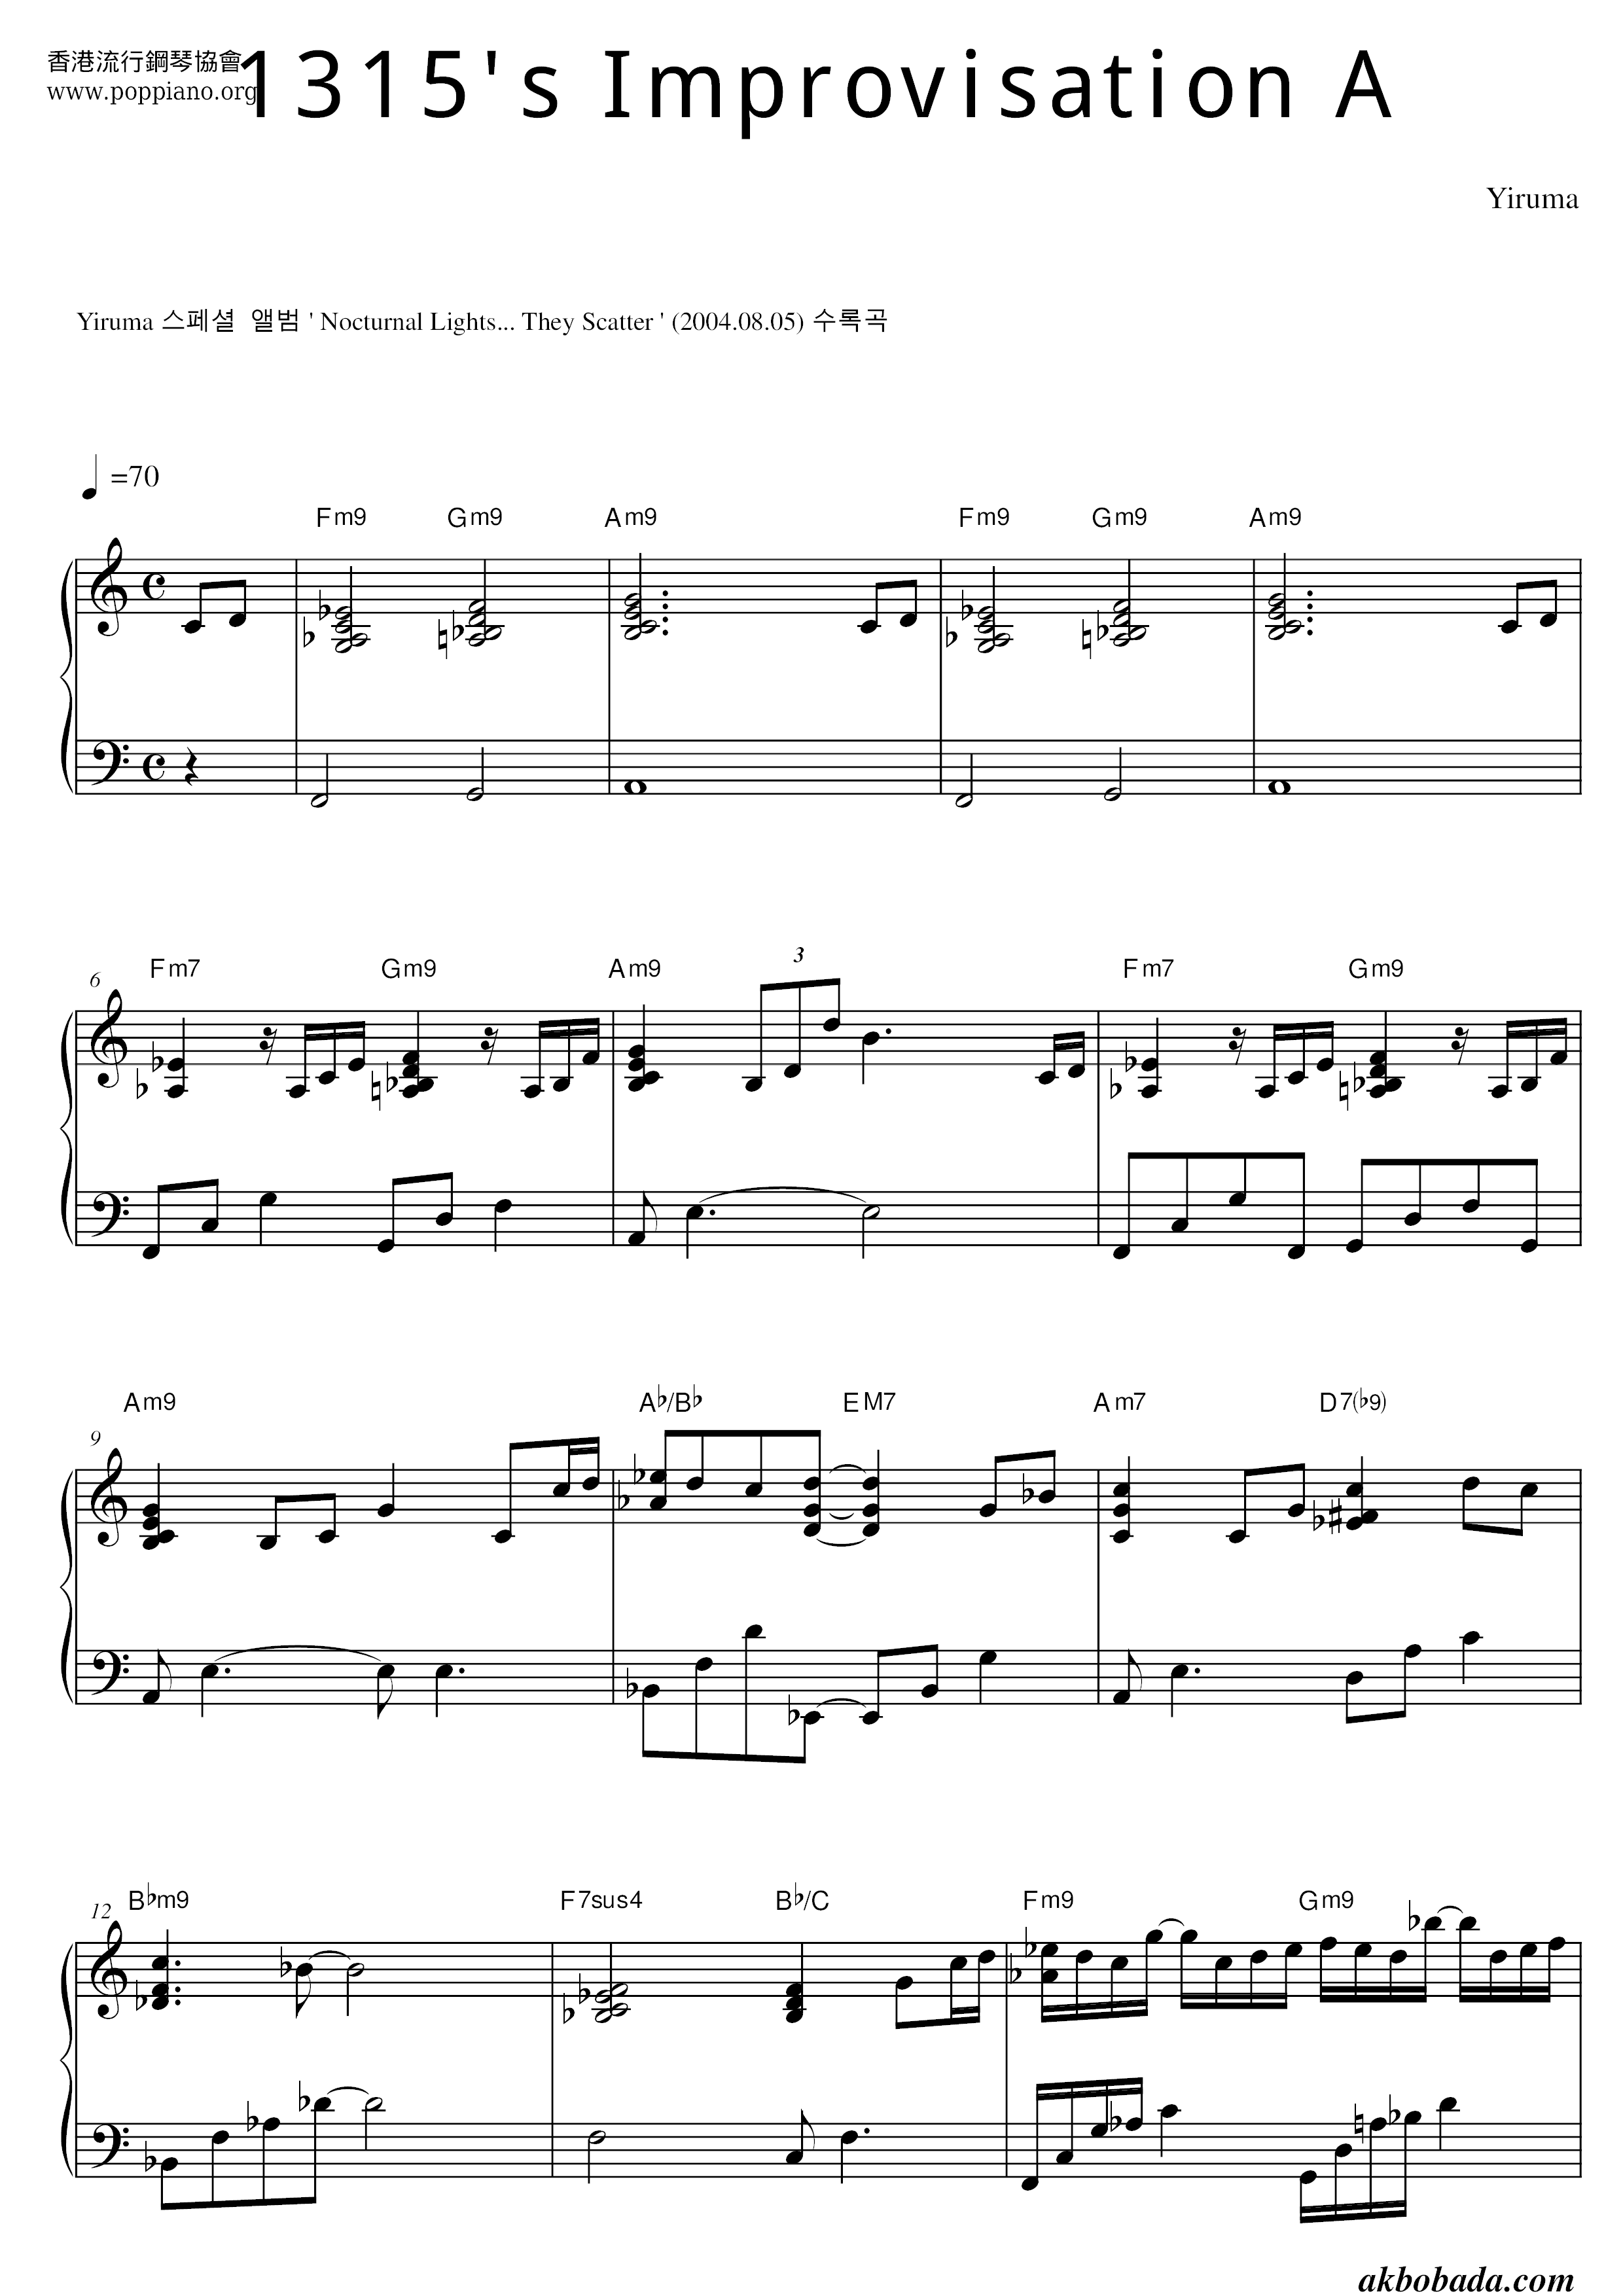 1315's Improvisation Aピアノ譜